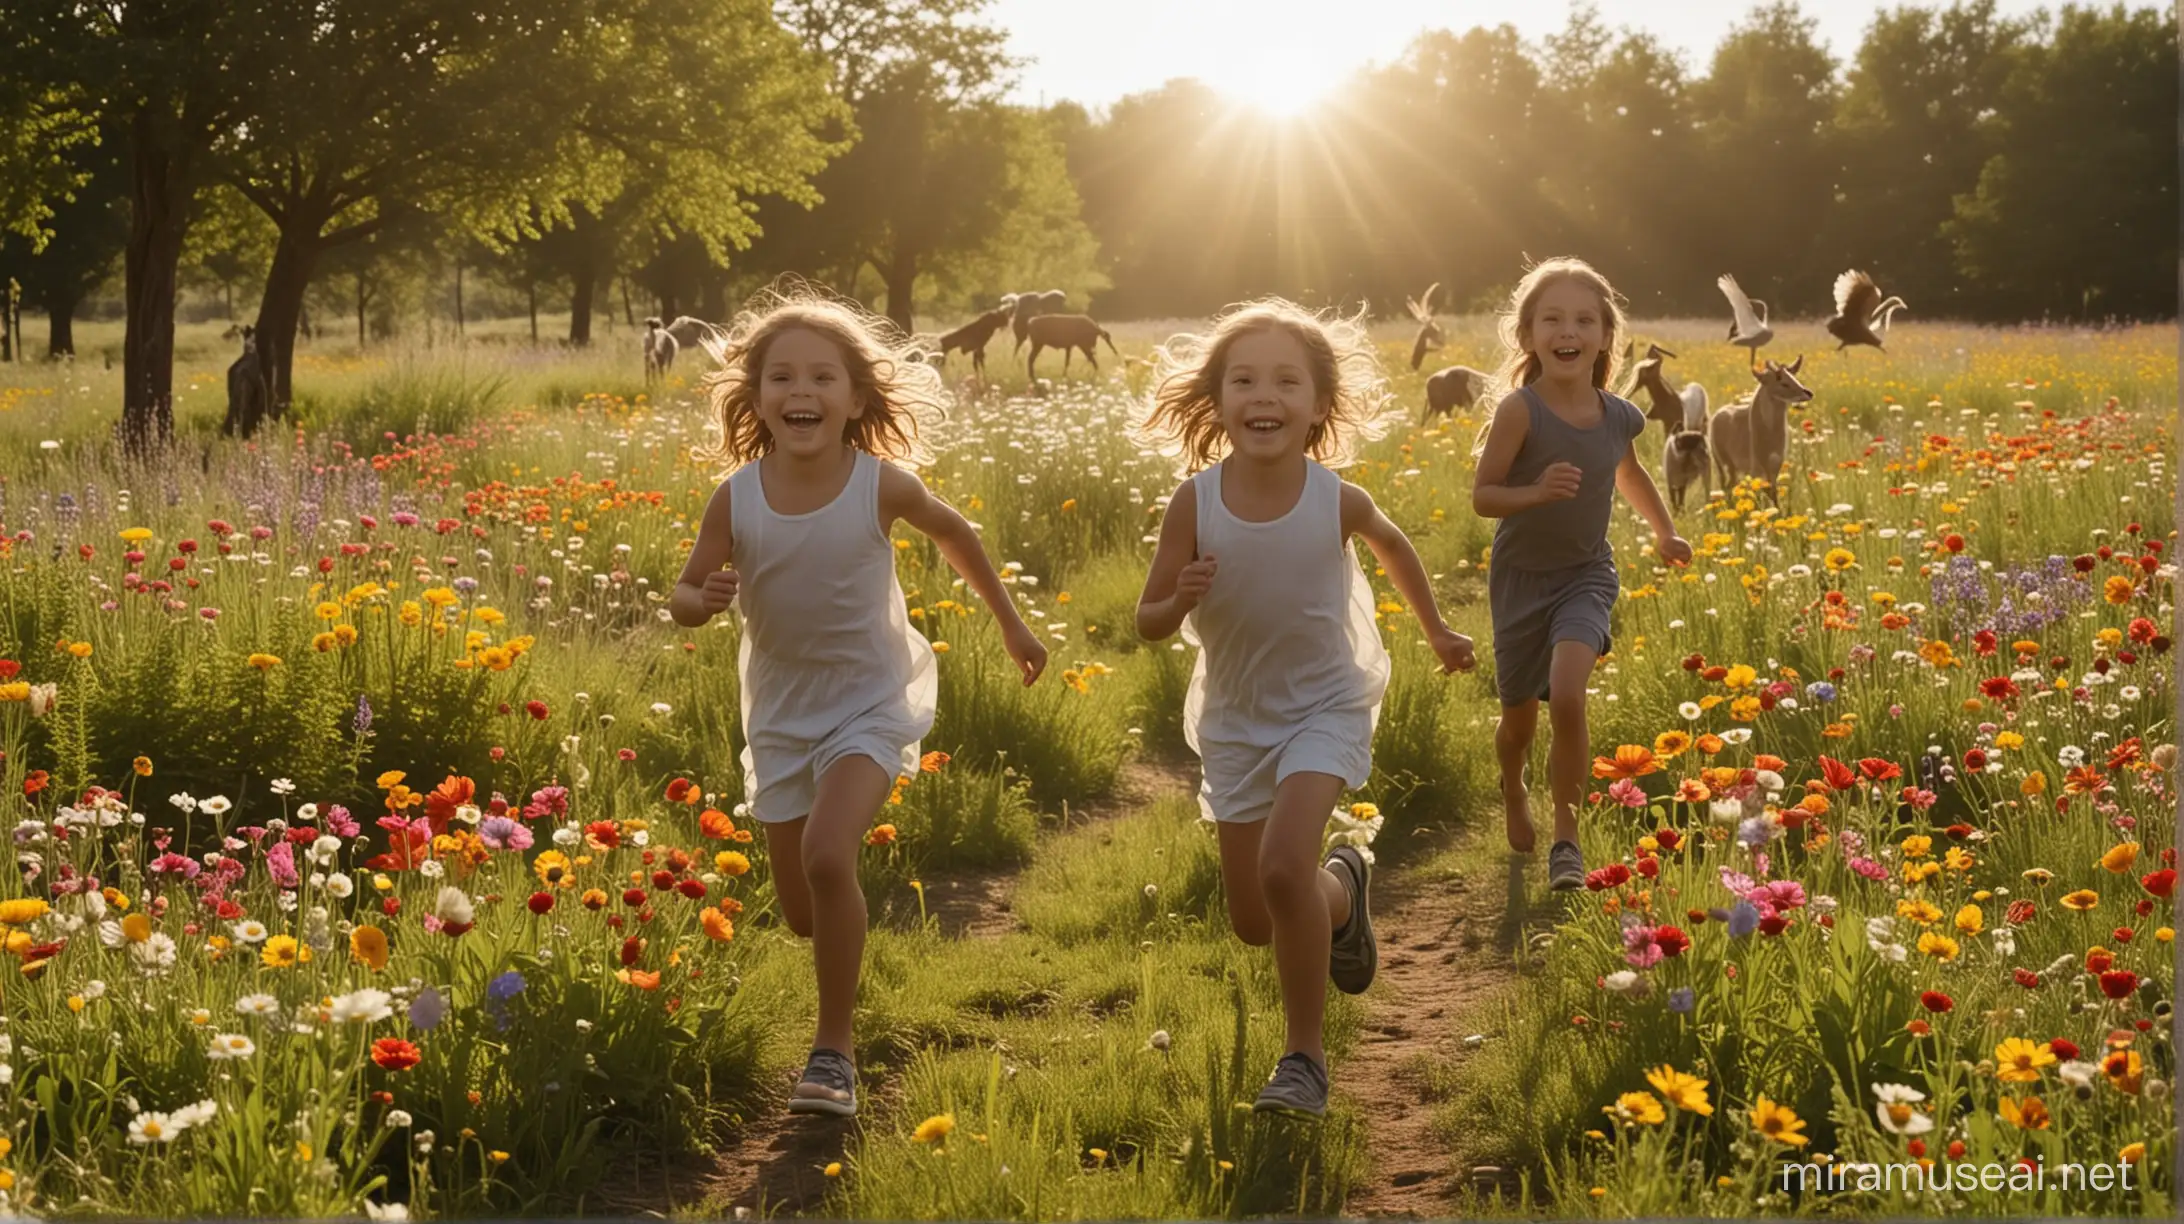 Joyful Children Frolicking in a Vibrant Flower Garden with Wildlife and Sunny Skies